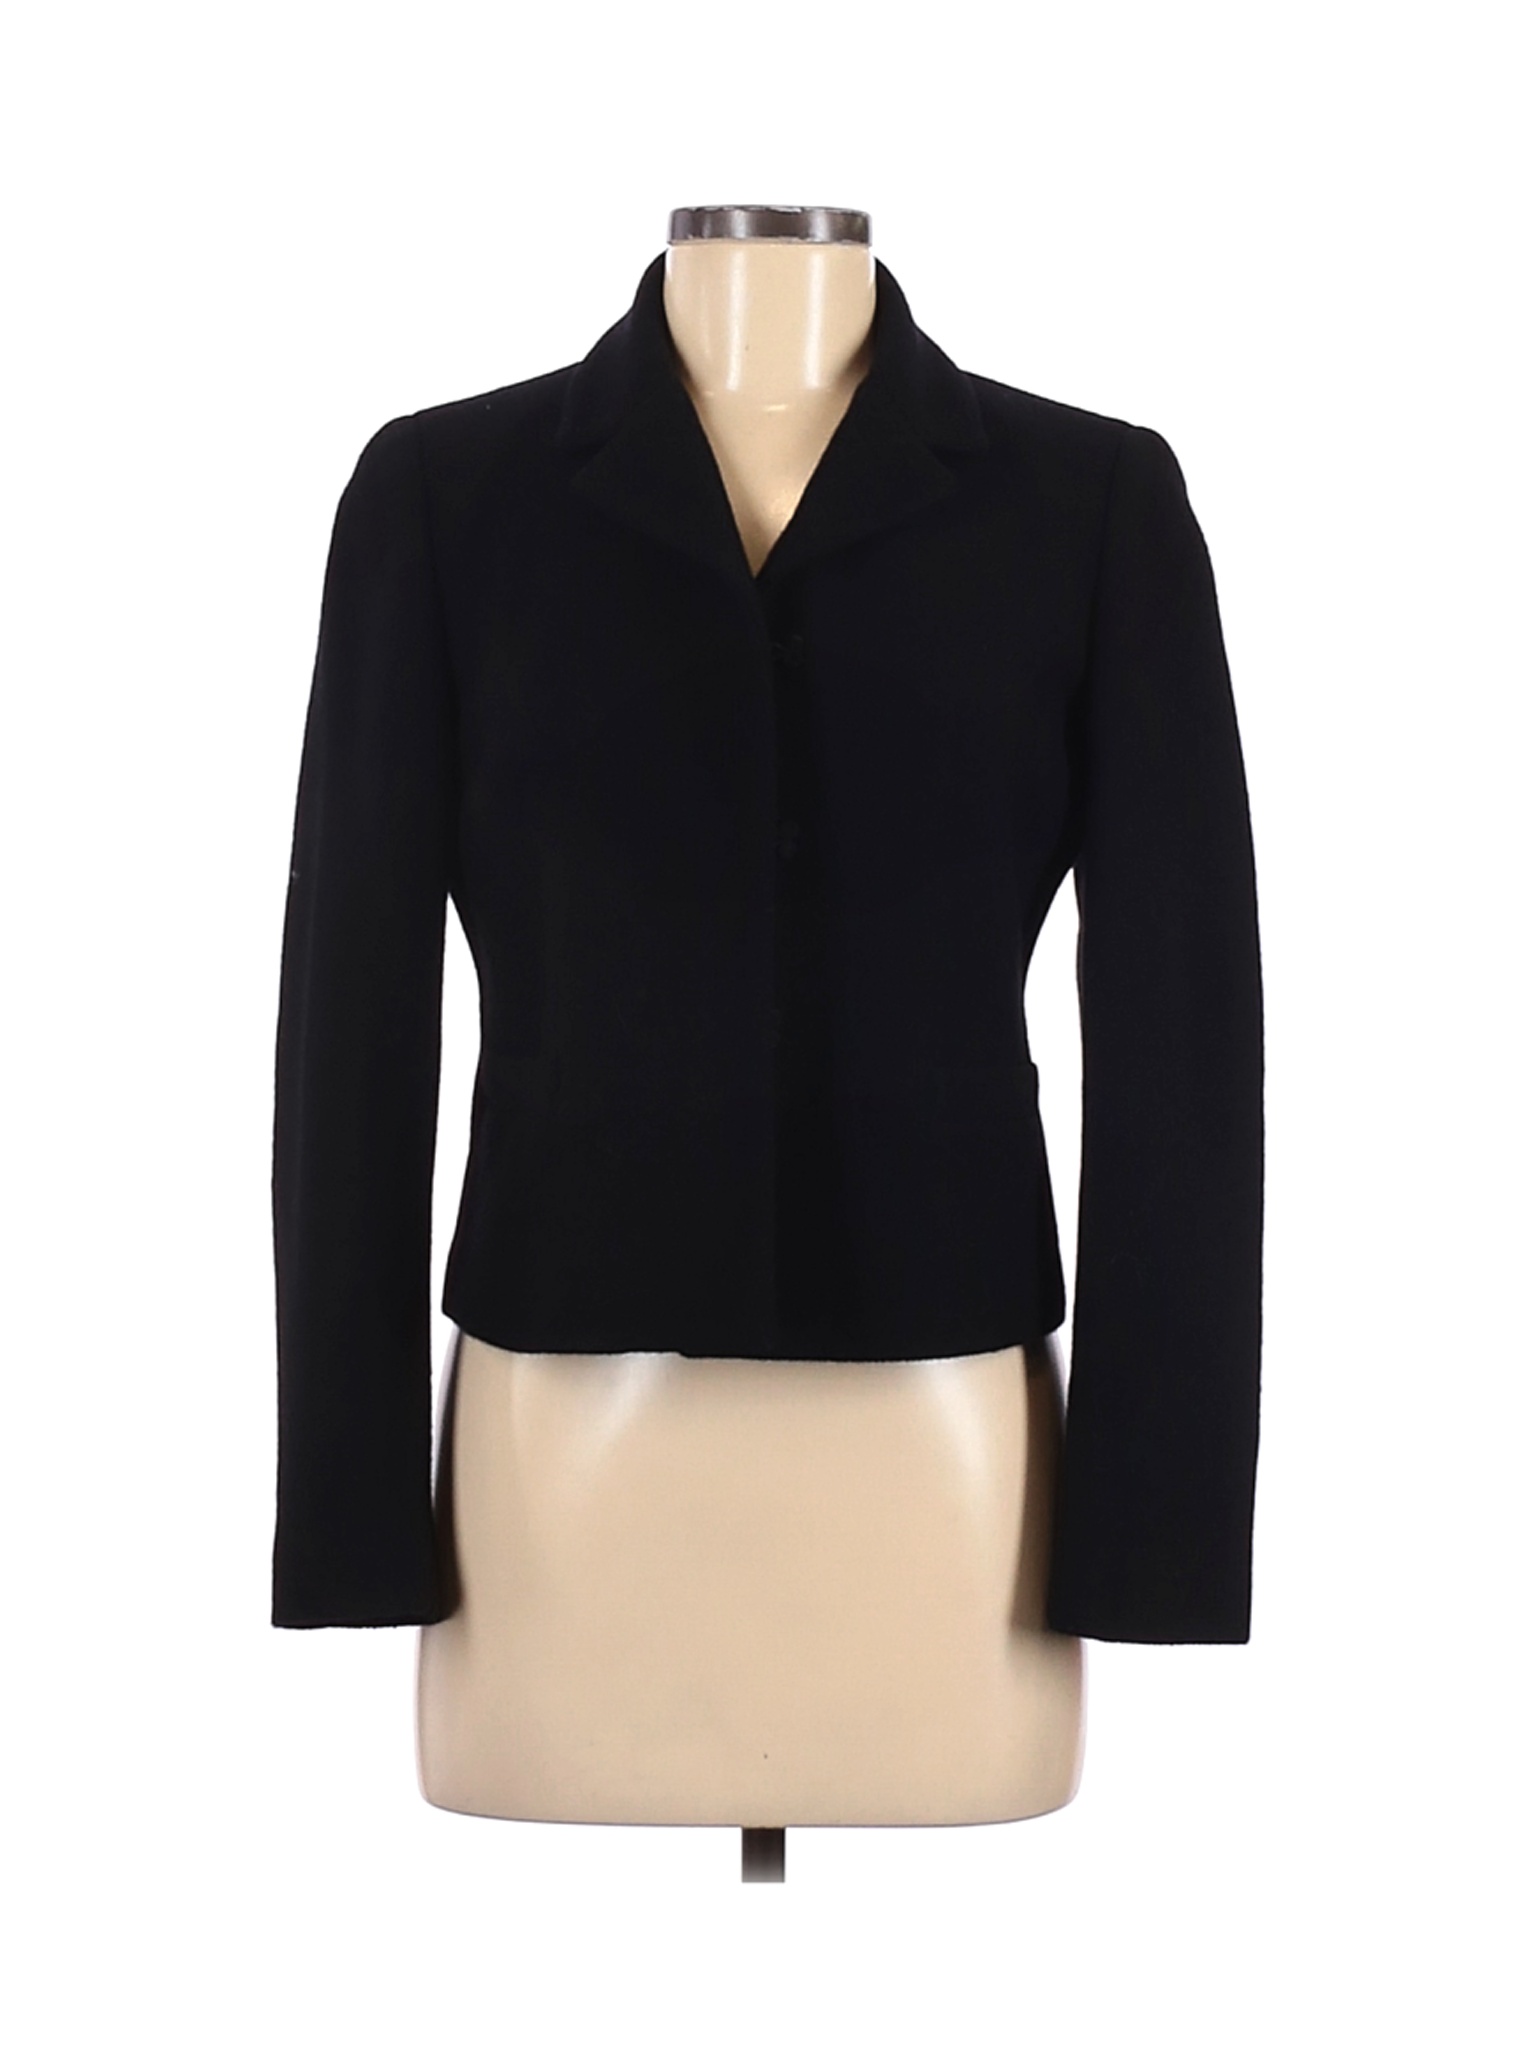 Talbots Women Black Wool Blazer 6 | eBay